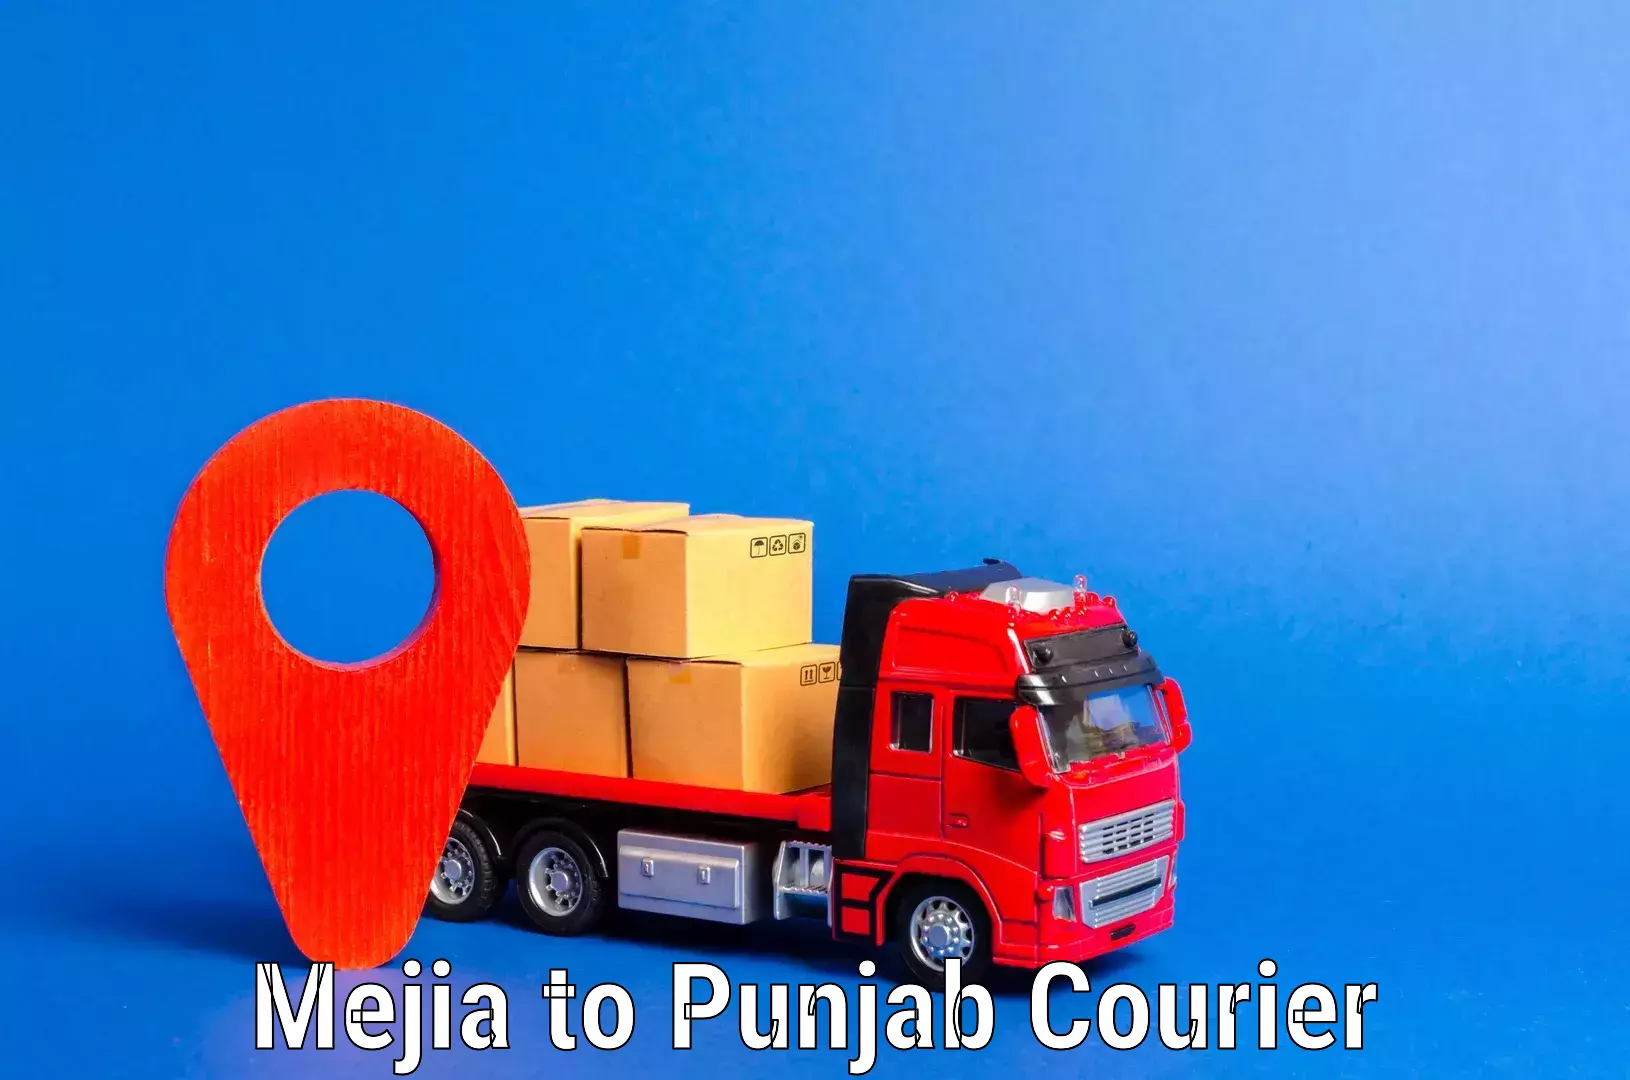 Quality moving company Mejia to Punjab